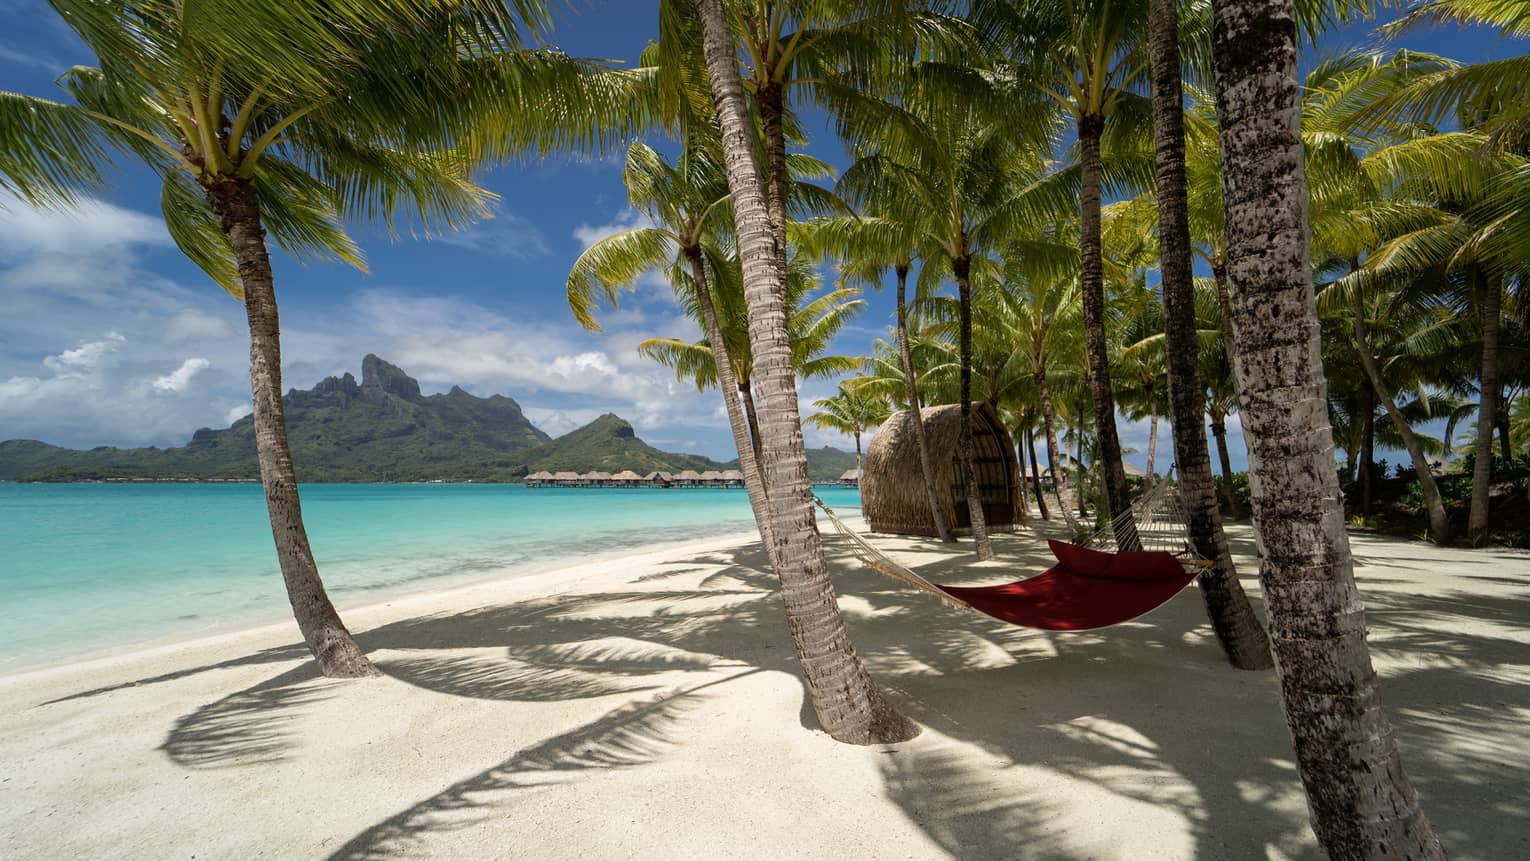 Bora Bora beach with palm trees and a hanging hammock